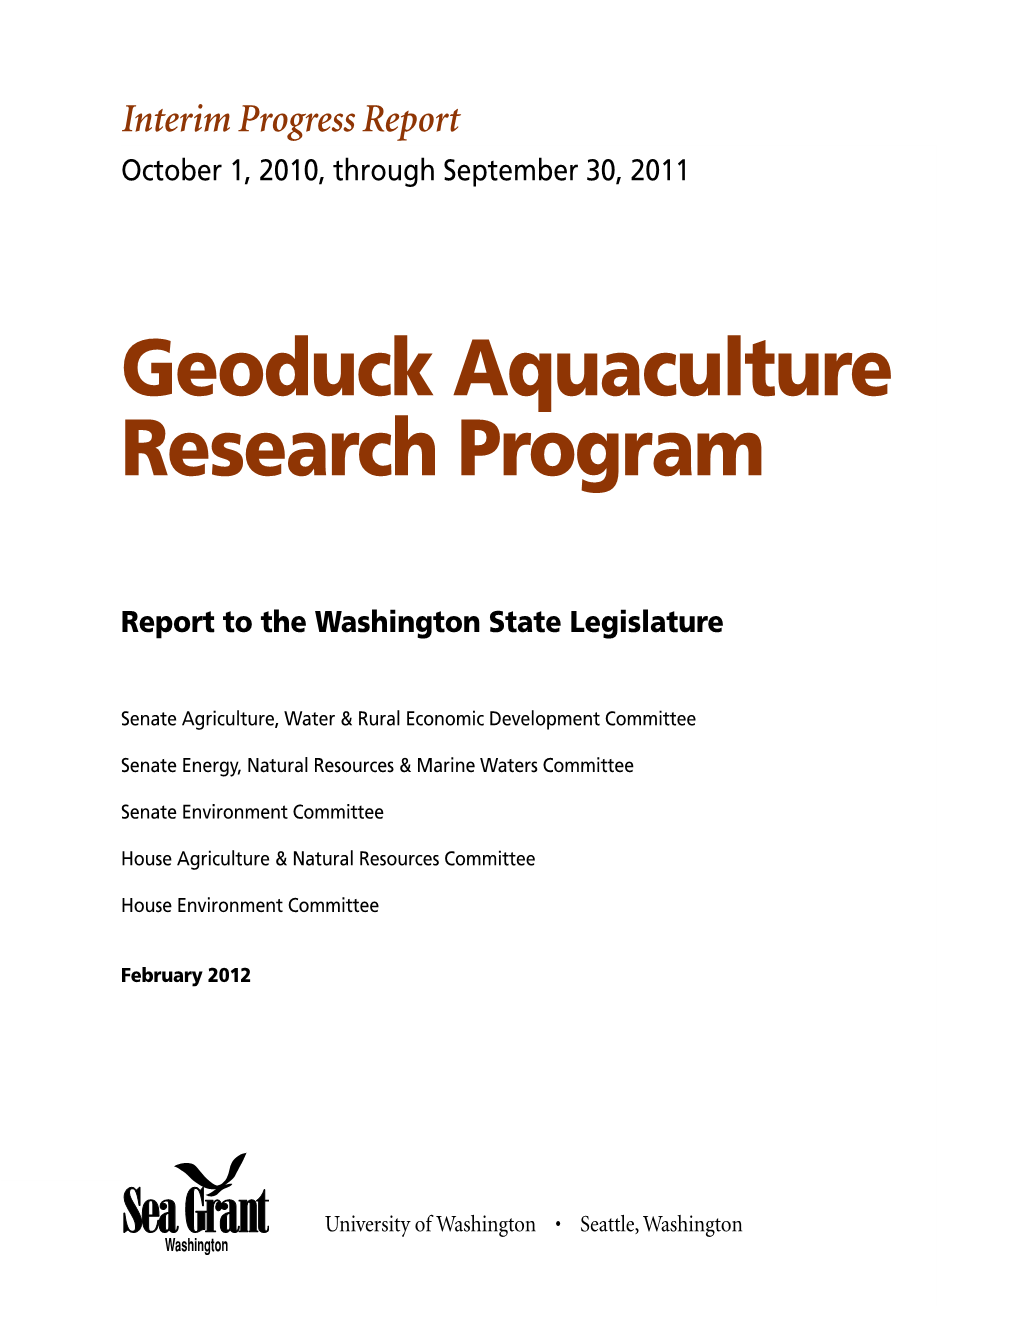 Geoduck Aquaculture Research Program